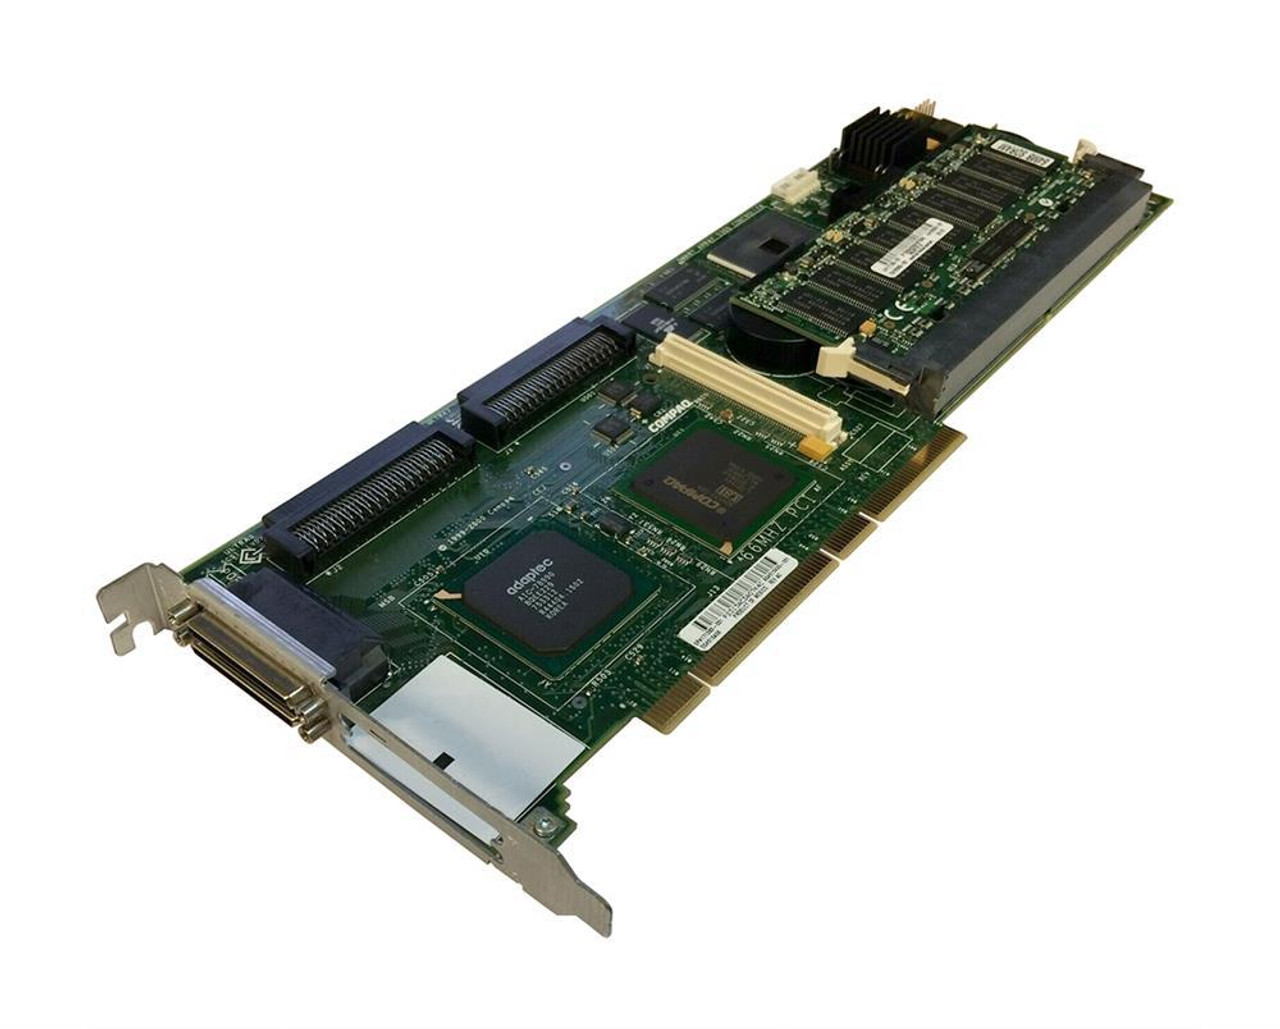 Compaq Smart Array 5302 2-Channel 64-Bit Ultra3 128MB PCI SCSI LVD/SE Controller Card Mfr P/N 171383-001-128MB